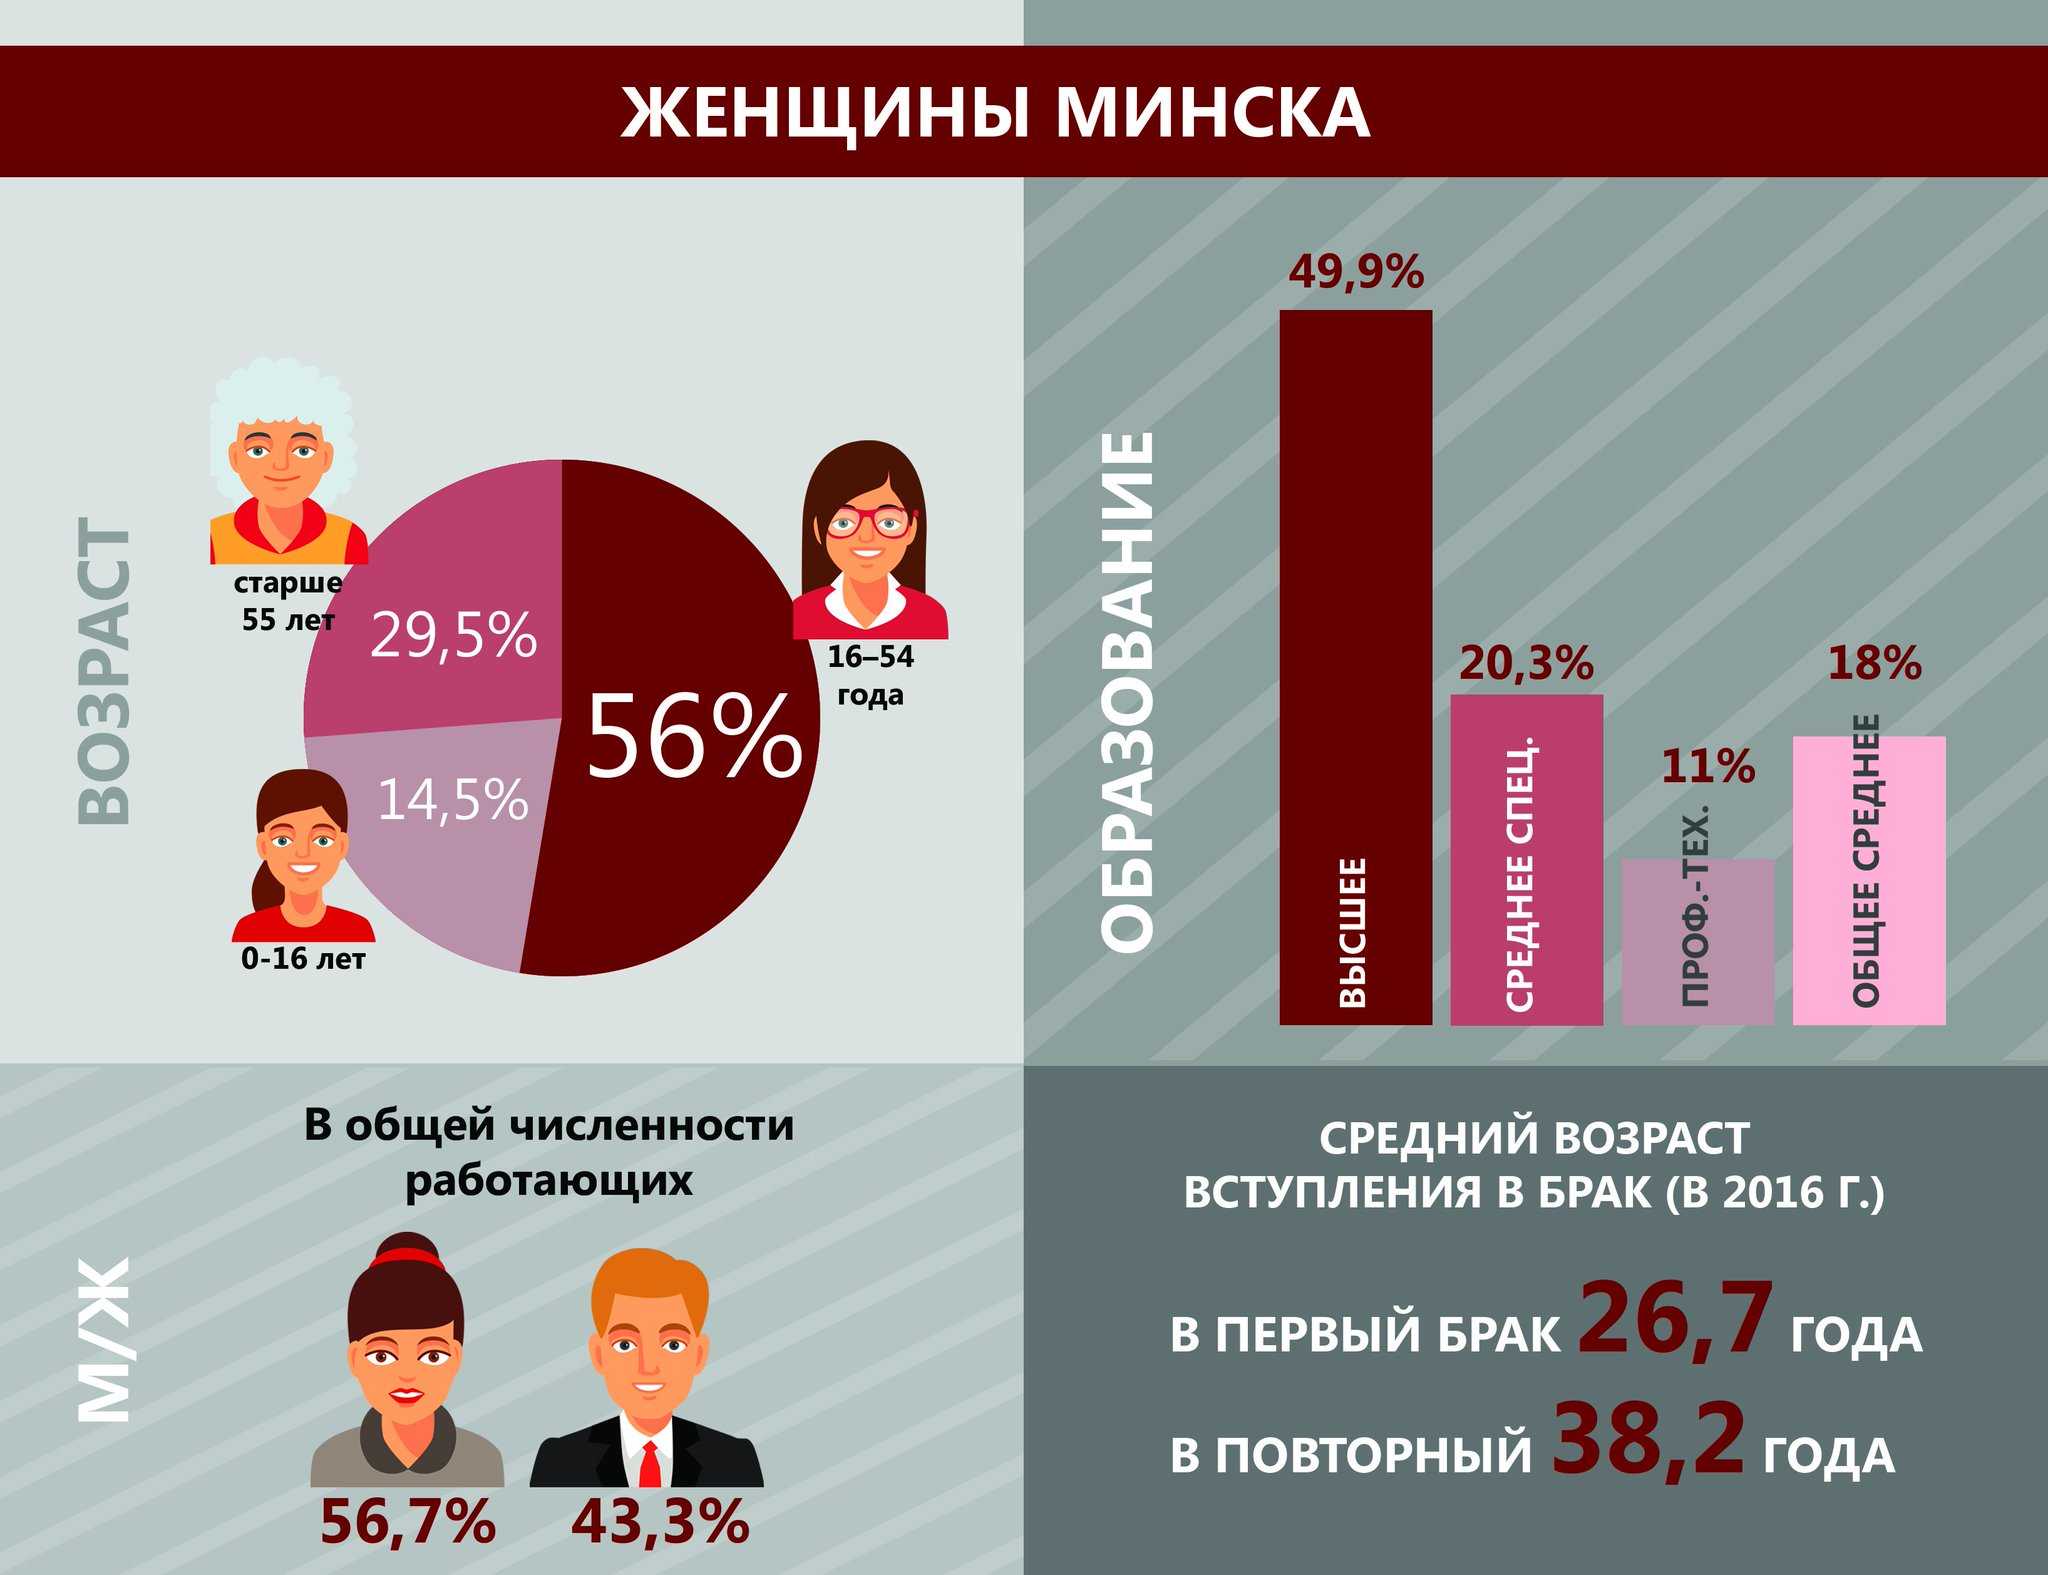 статистика супружеских измен по россии фото 32